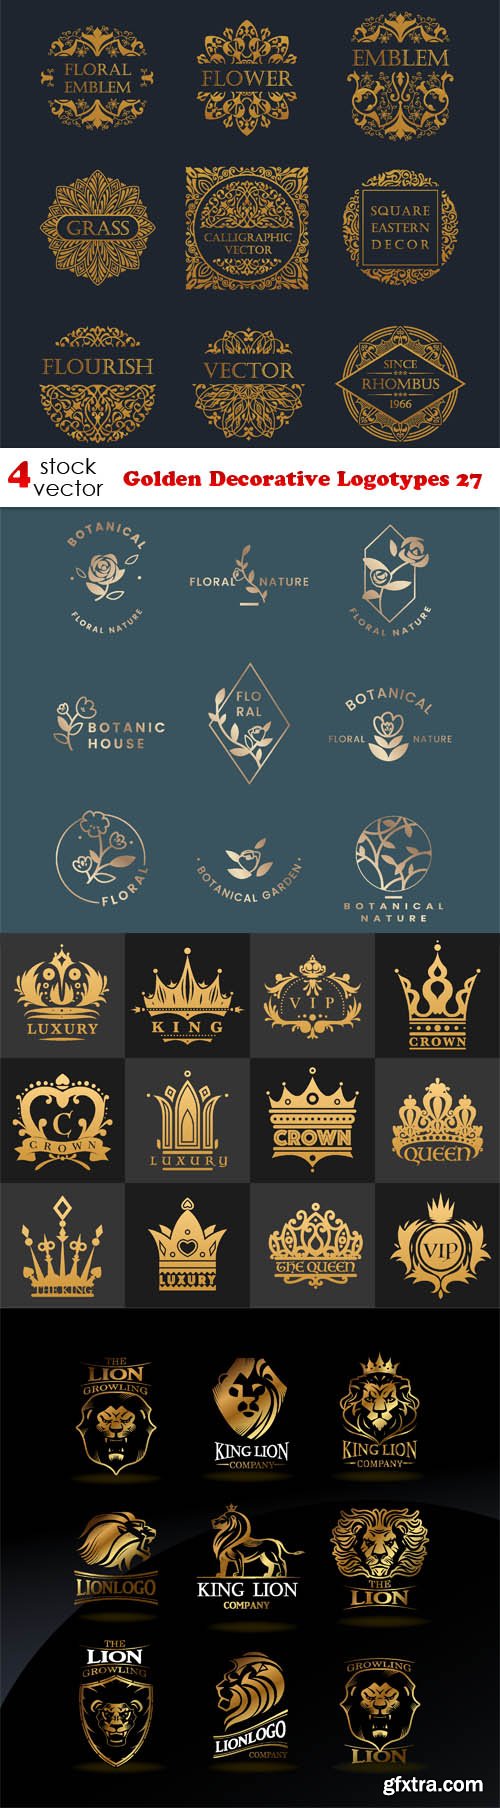 Vectors - Golden Decorative Logotypes 27